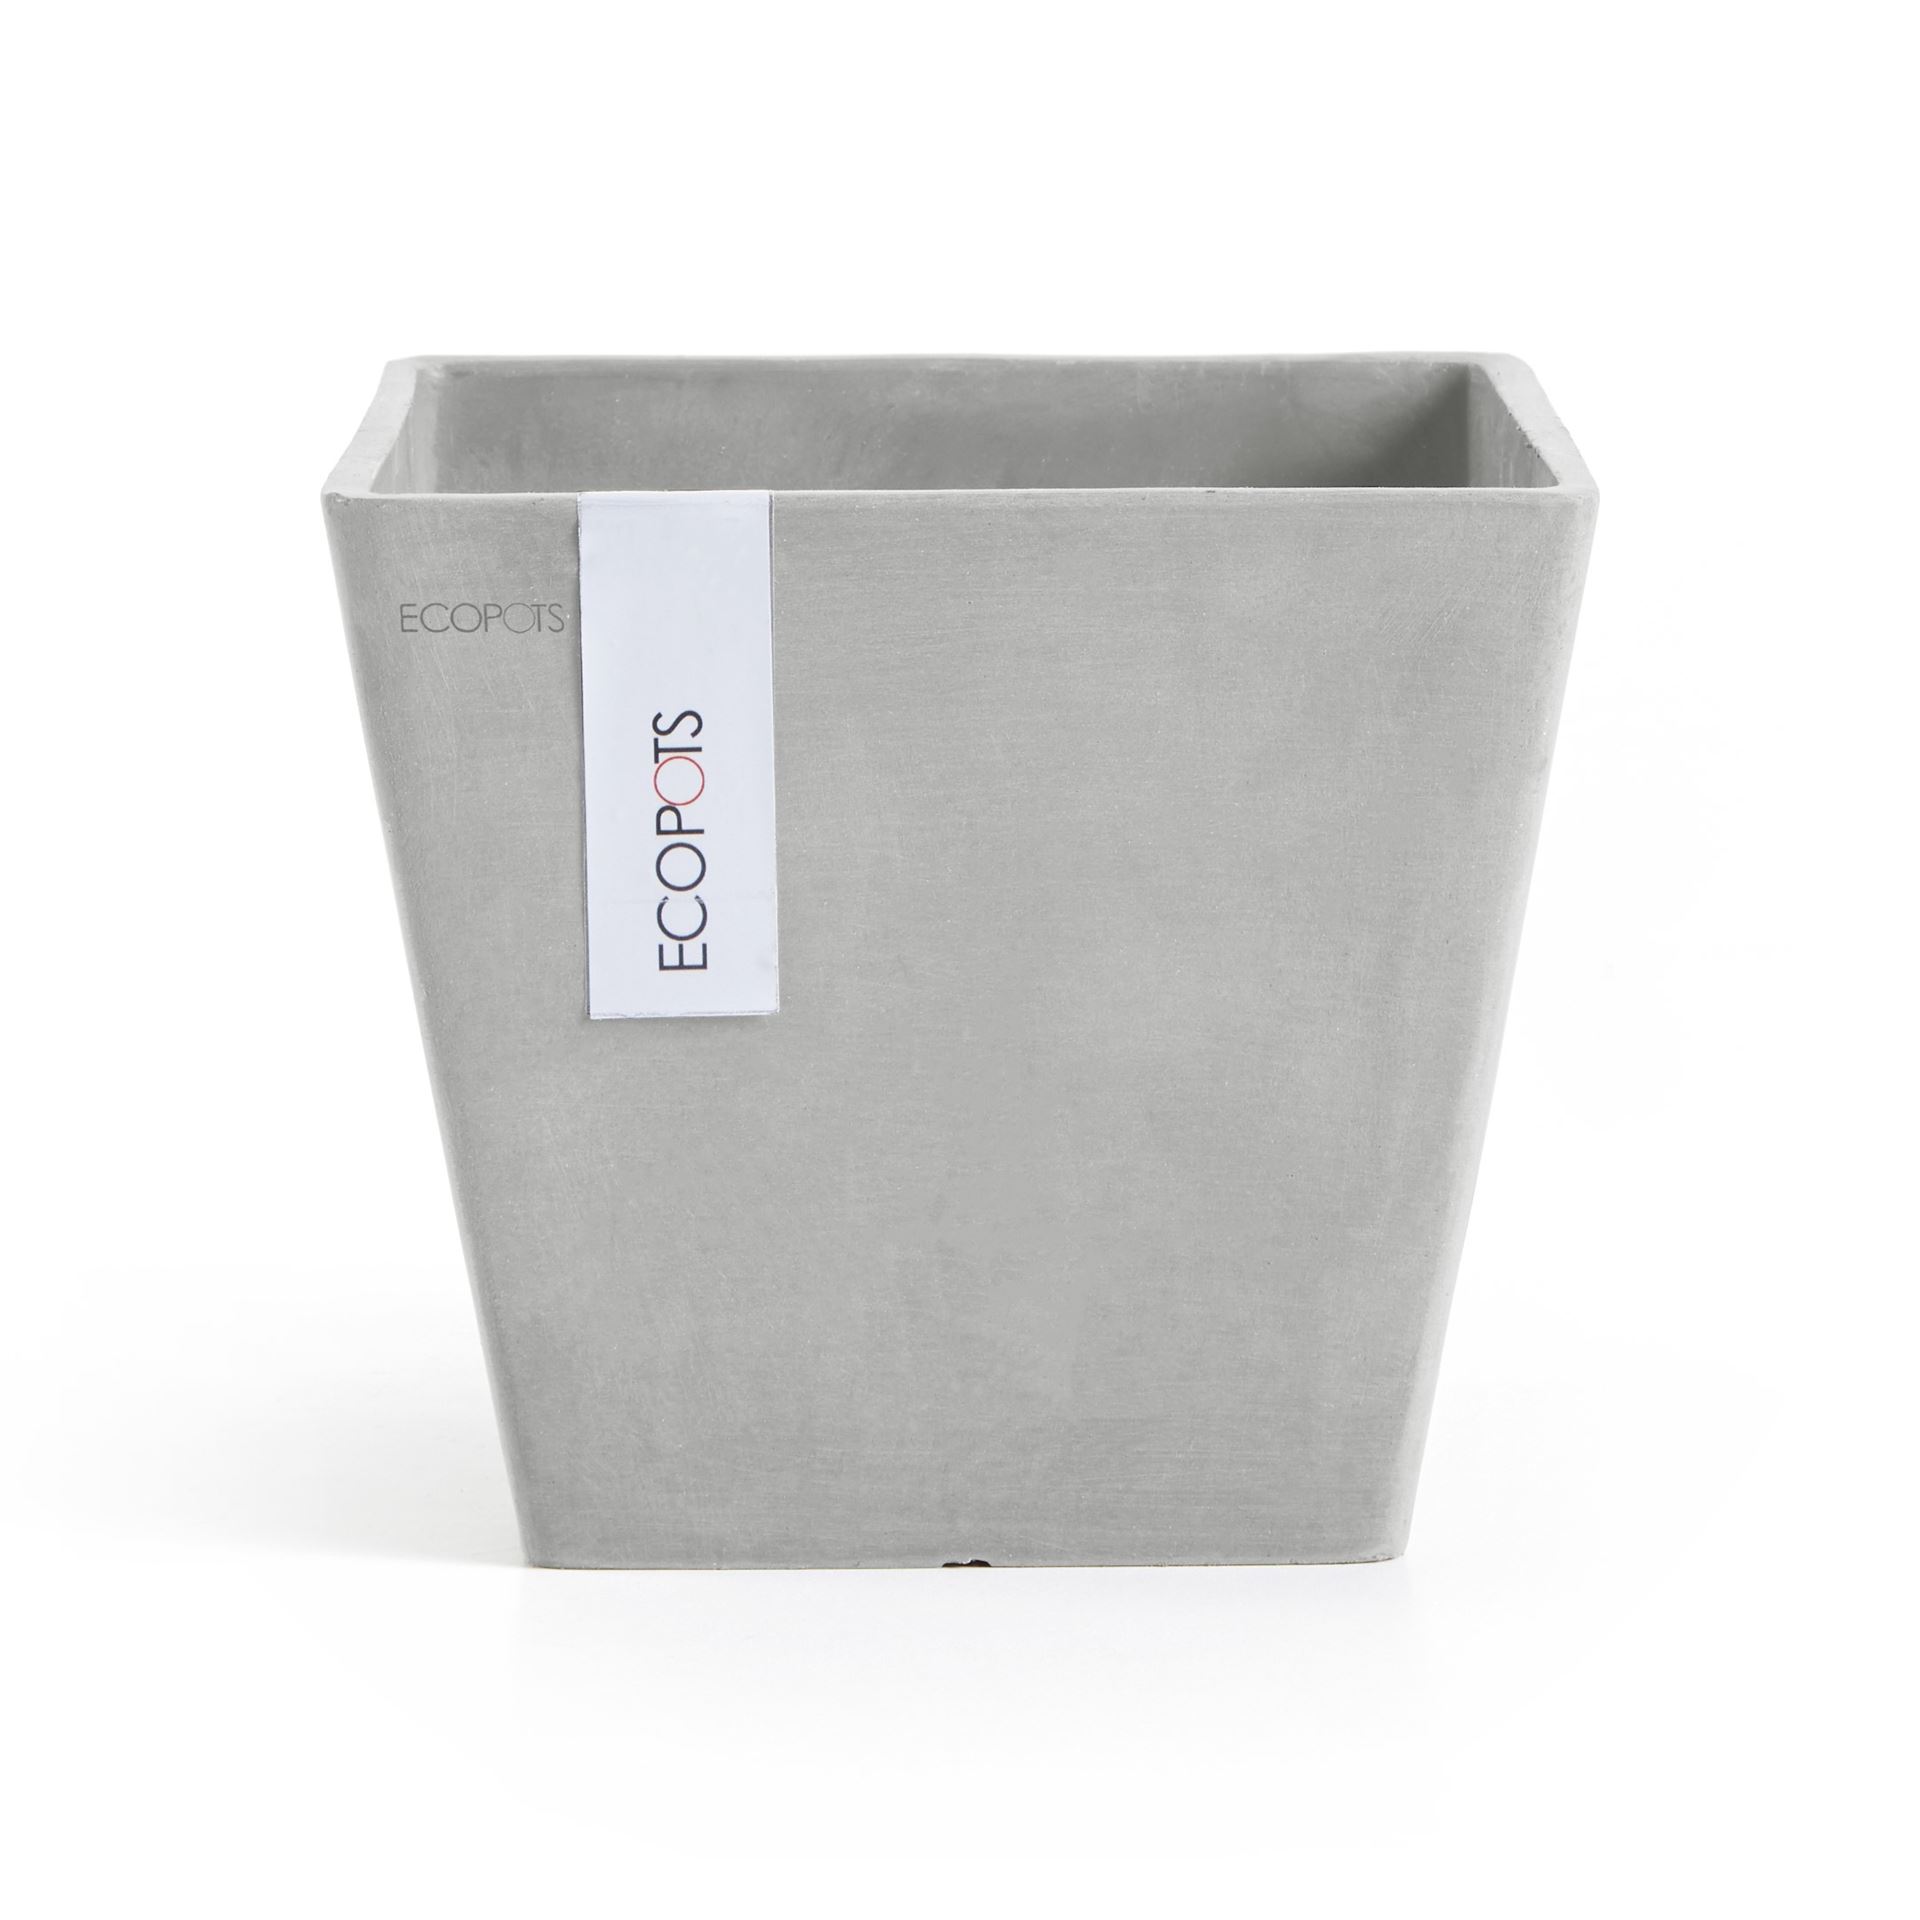 Ecopots-rotterdam-white-grey-LBH-20x20x17-5-cm